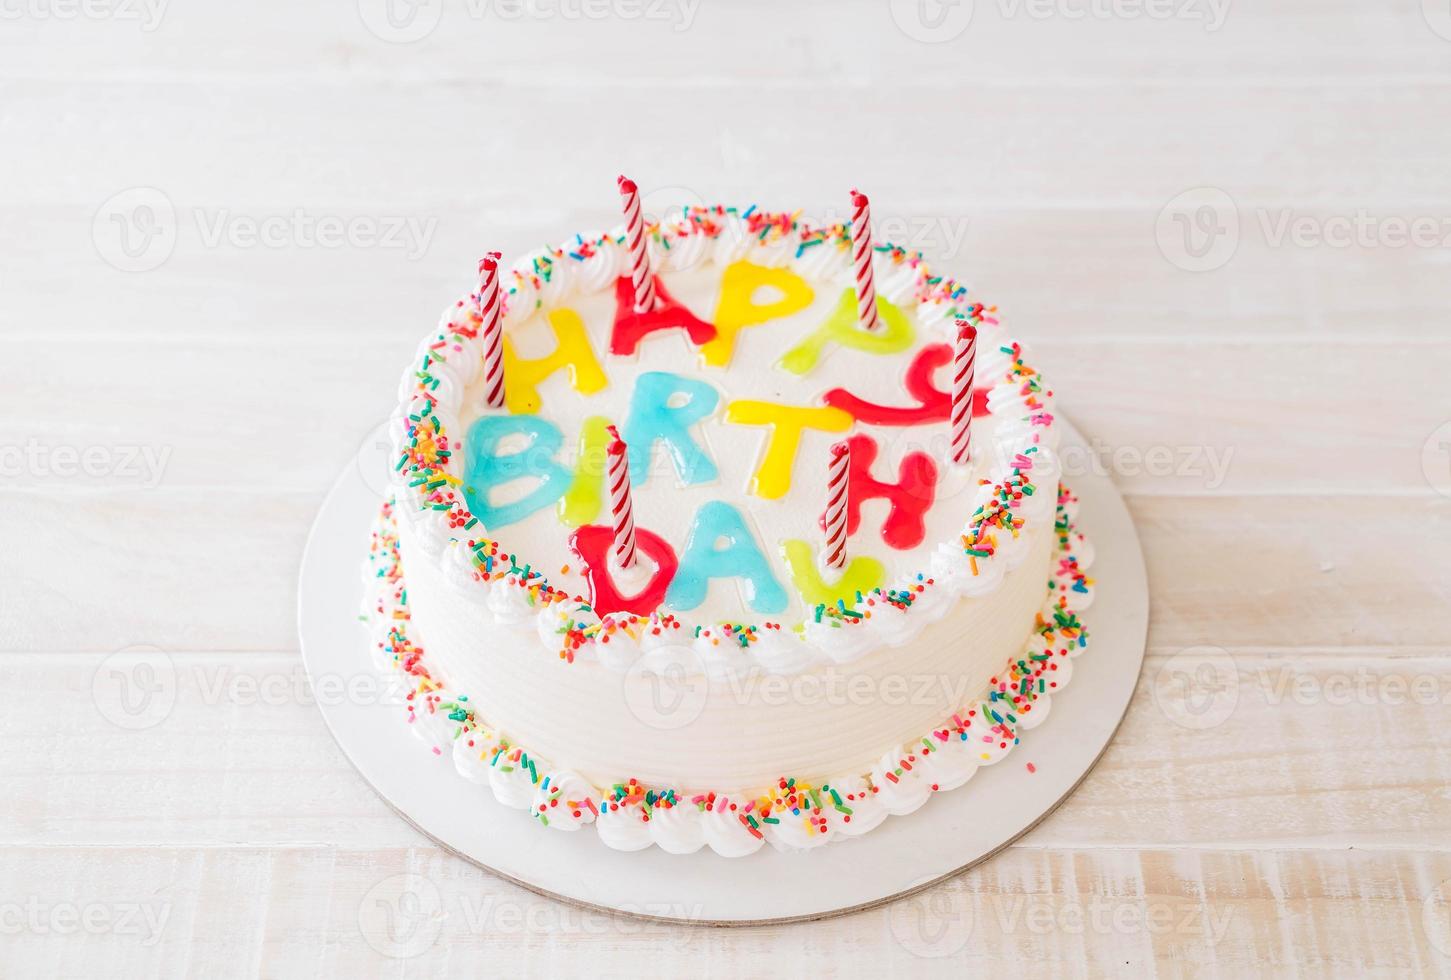 bolo de feliz aniversário na mesa foto